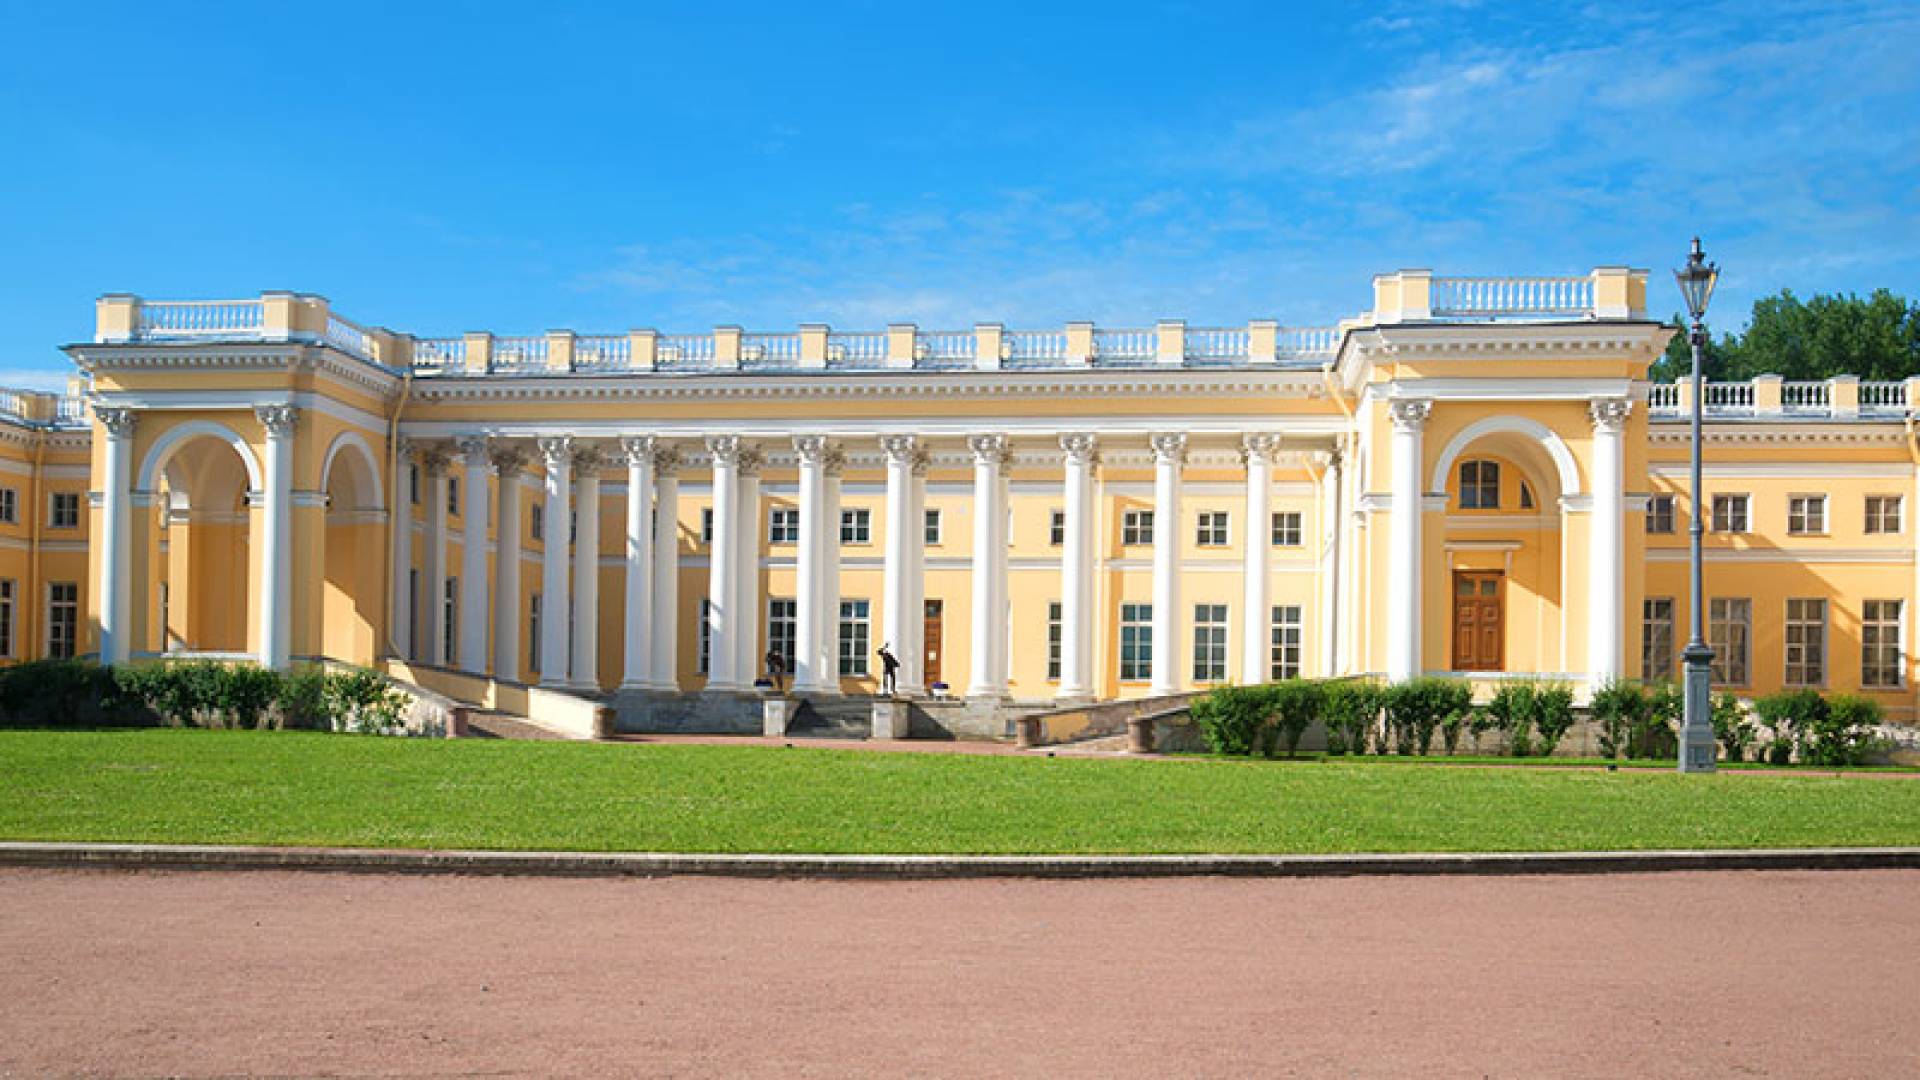 TSARSKOYE SELO, Alexander Palace